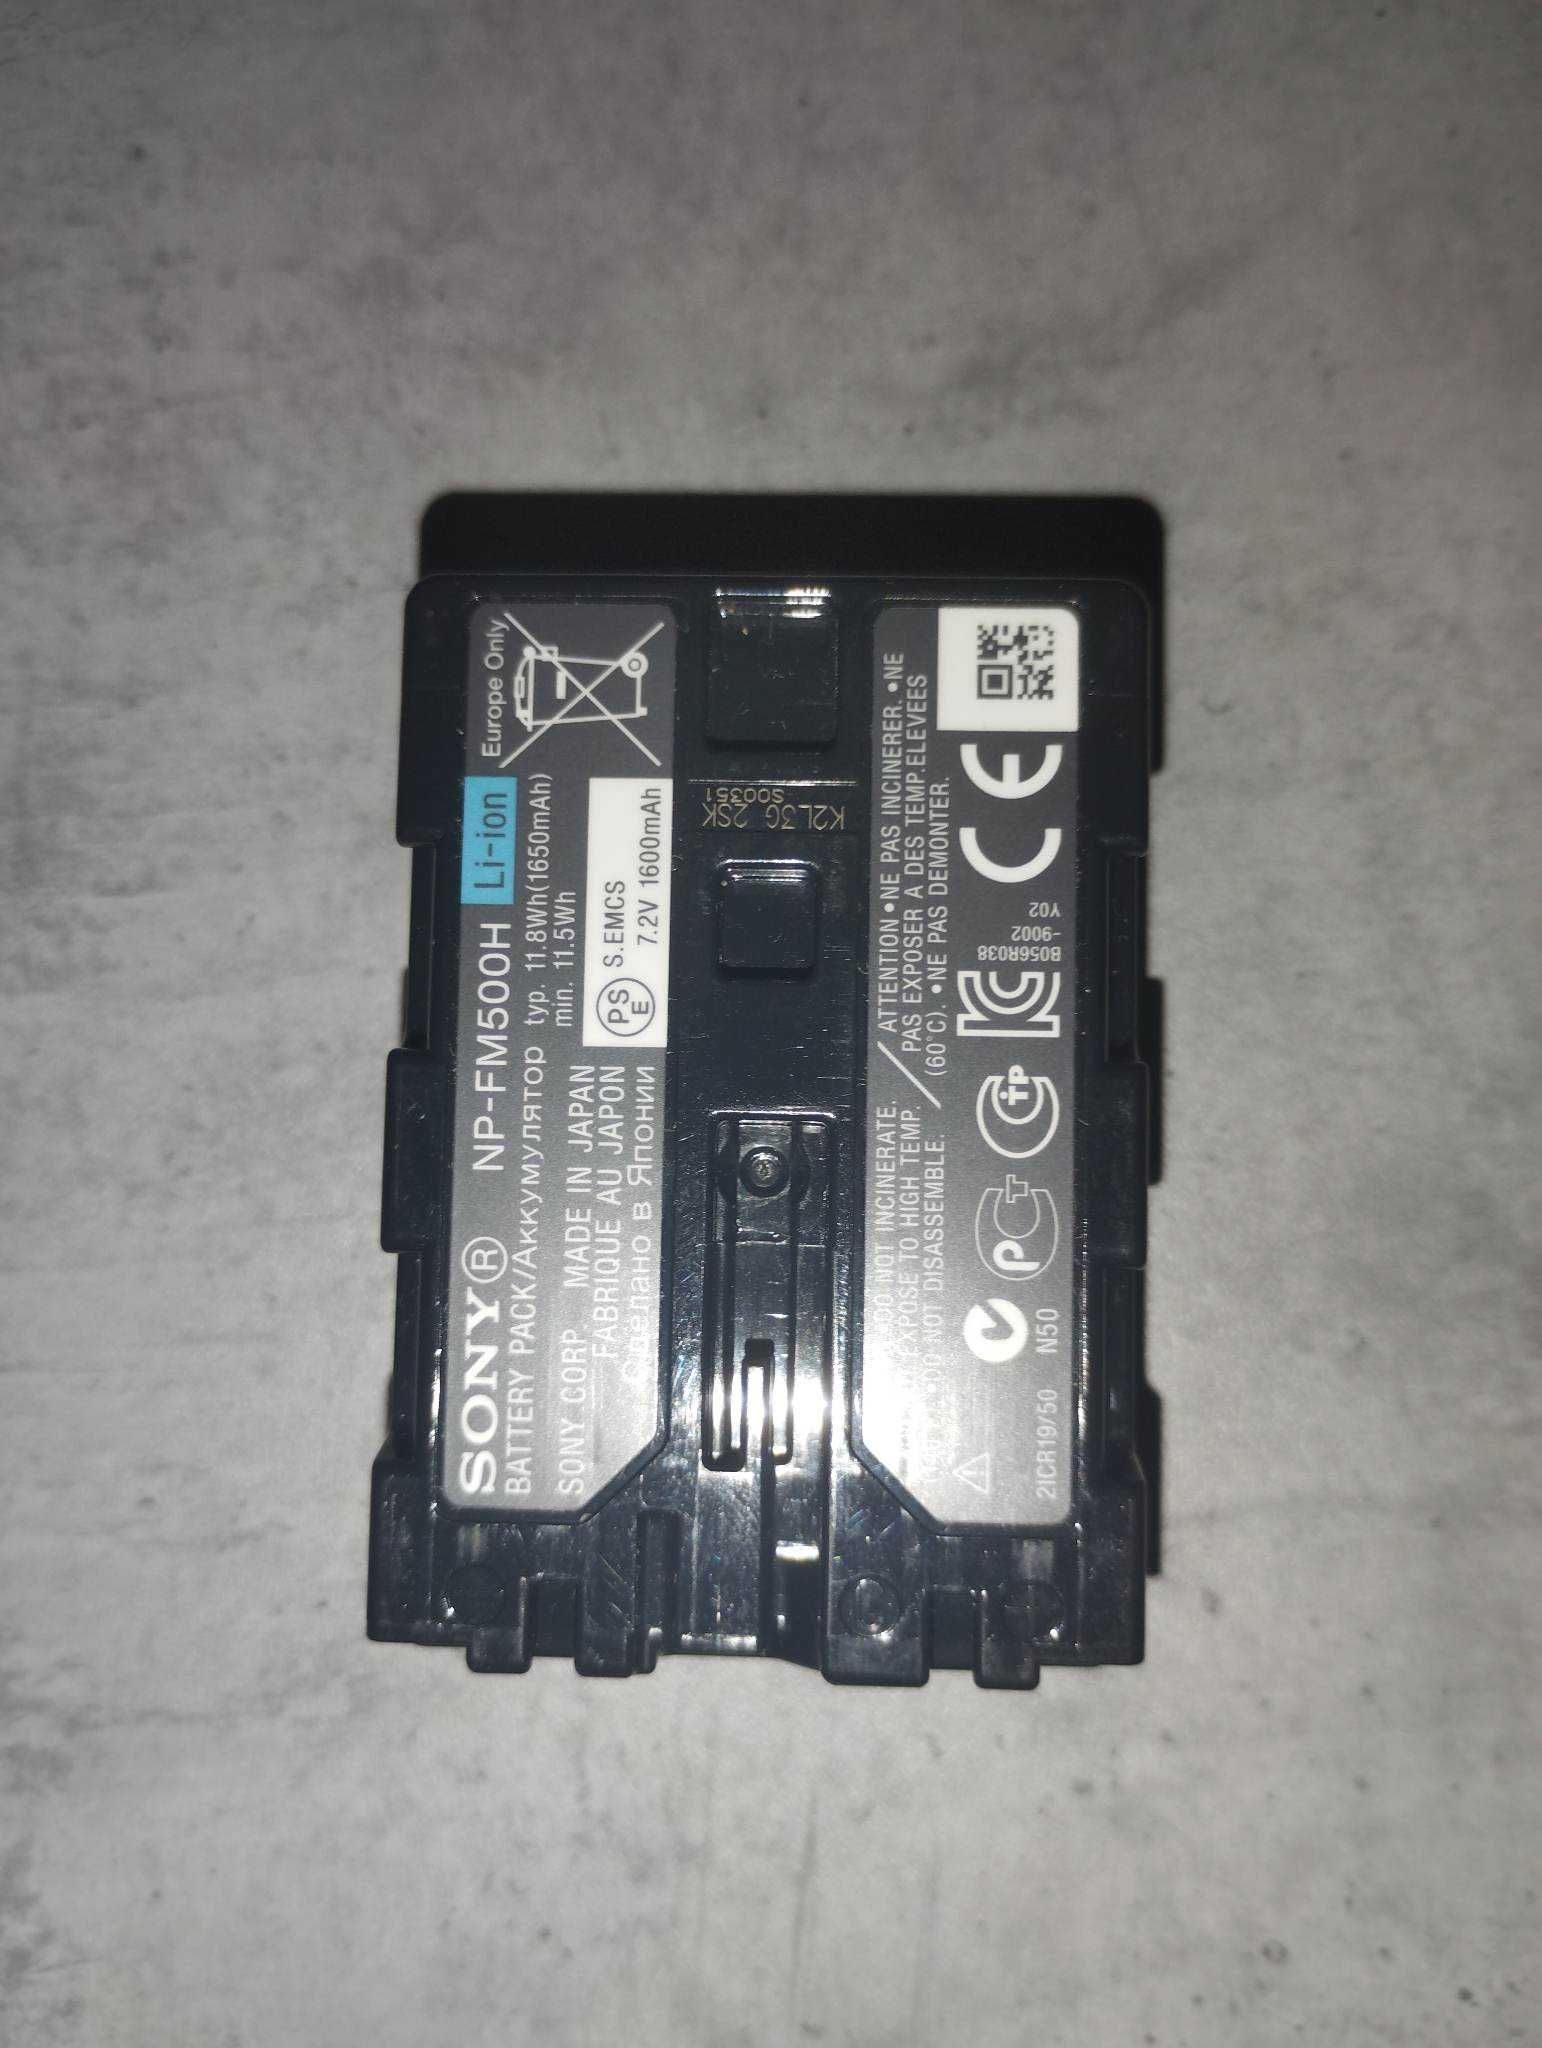 Aparat Sony Alfa 350 + Karta Pamięci Compact Flash 16GB